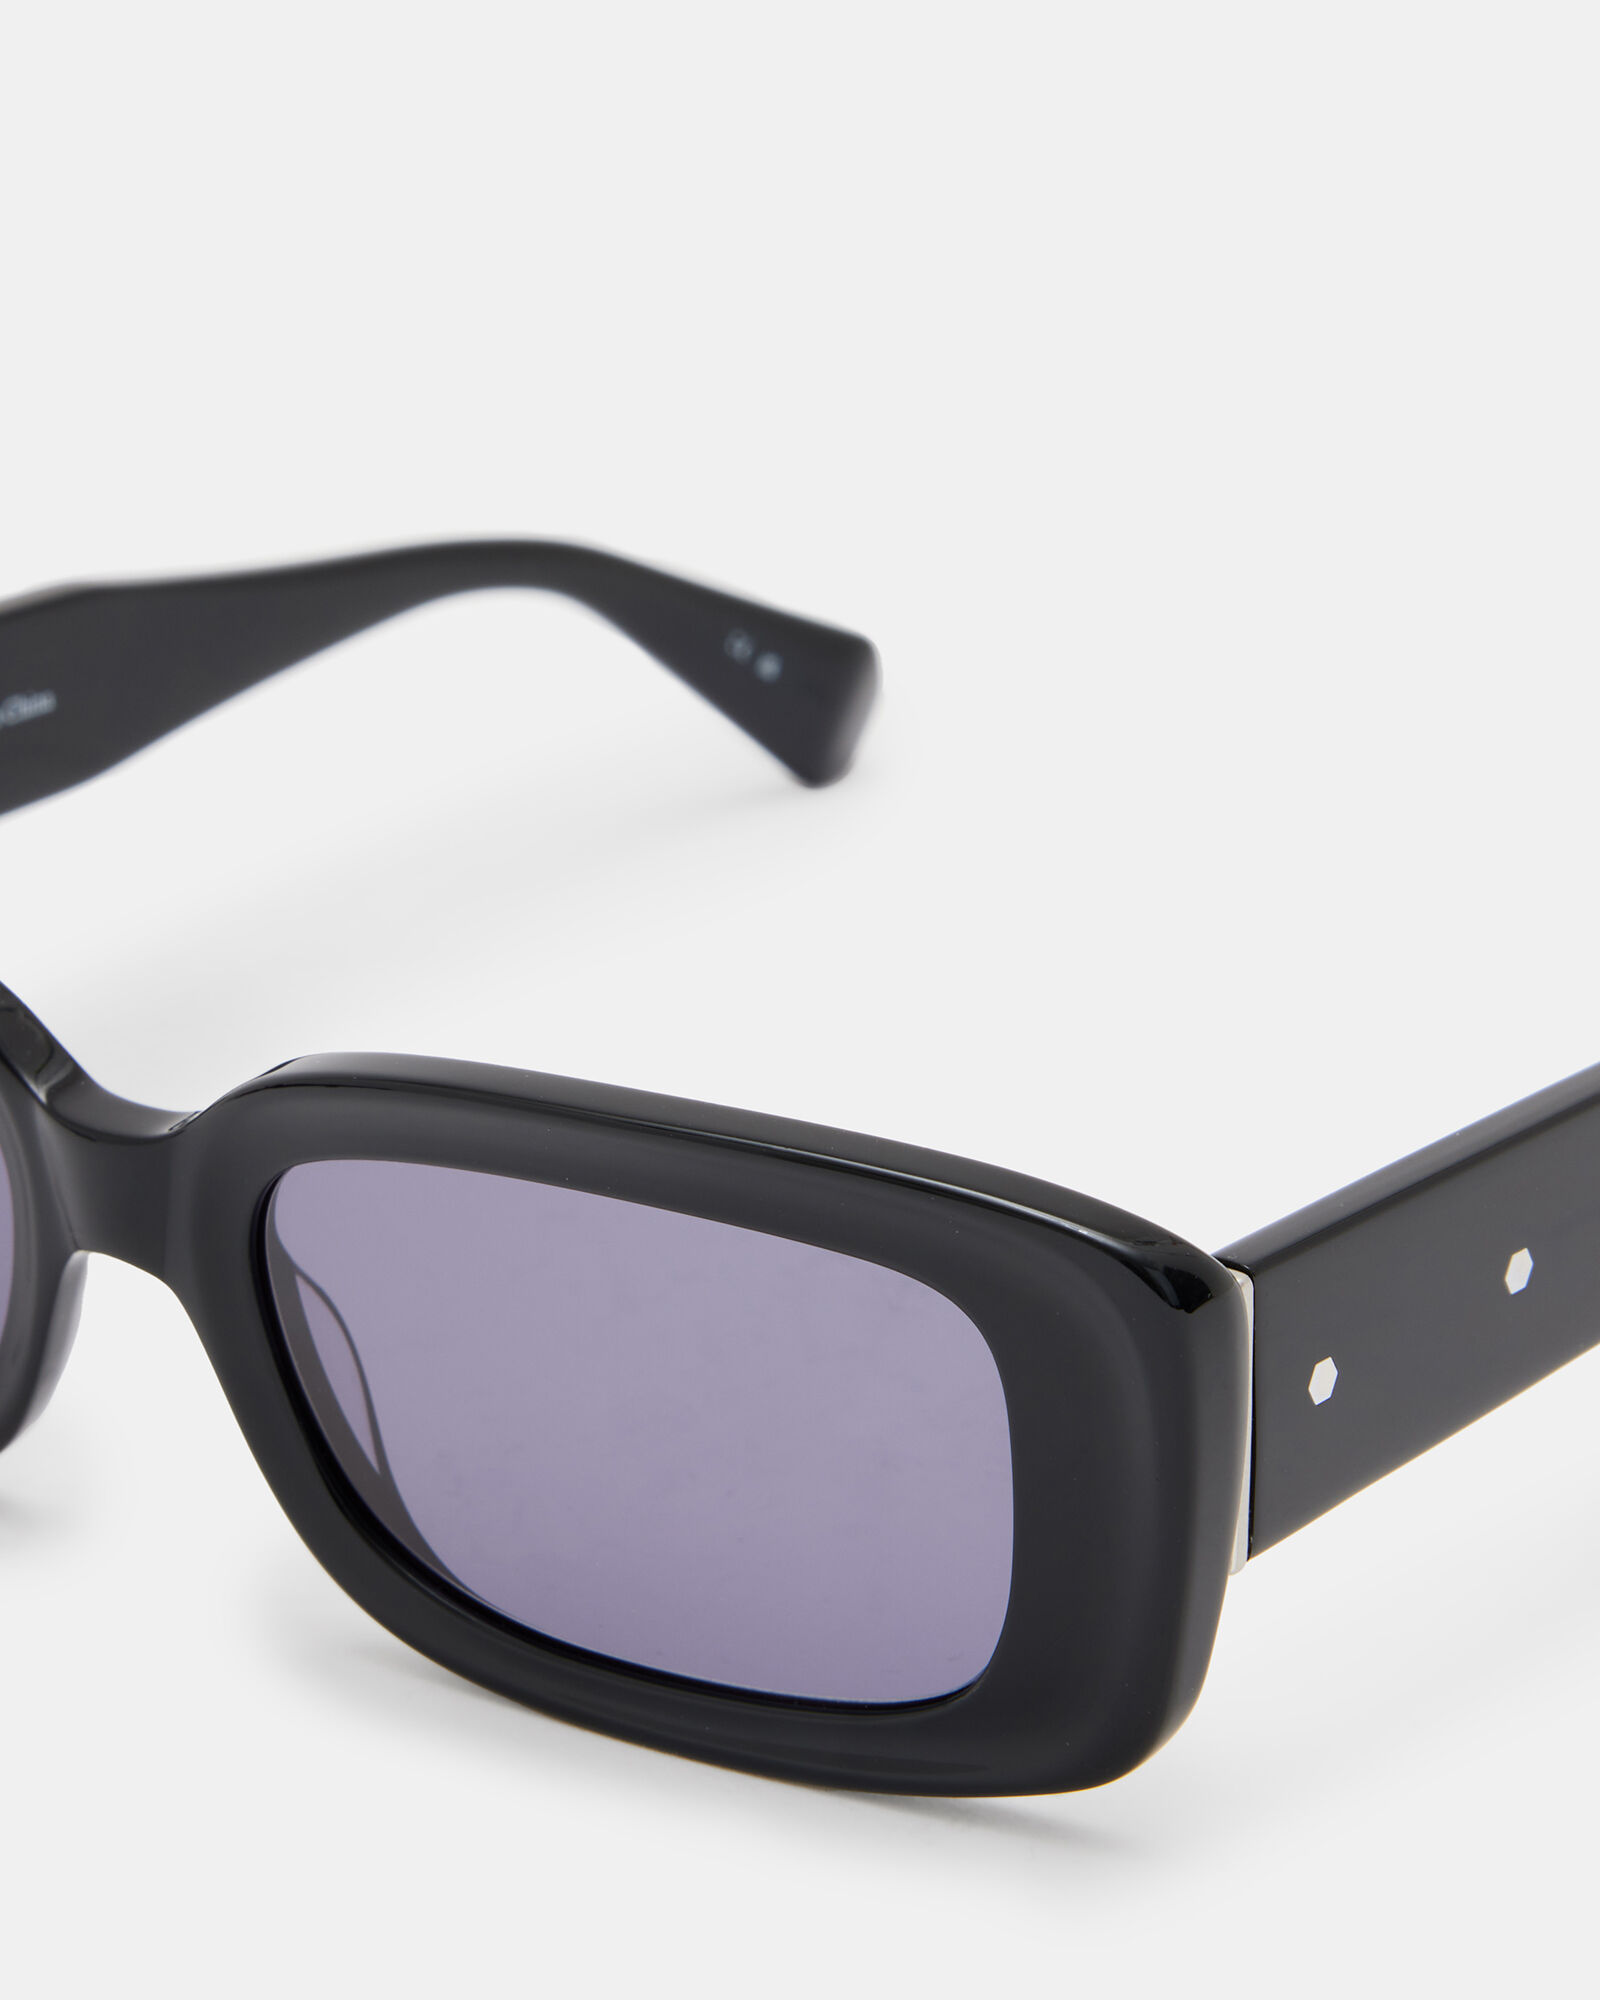 Tommy Hilfiger Men's Grey Rectangular Sunglasses TH 1671/S 0R80 UK 55  716736197739 - Sunglasses - Jomashop